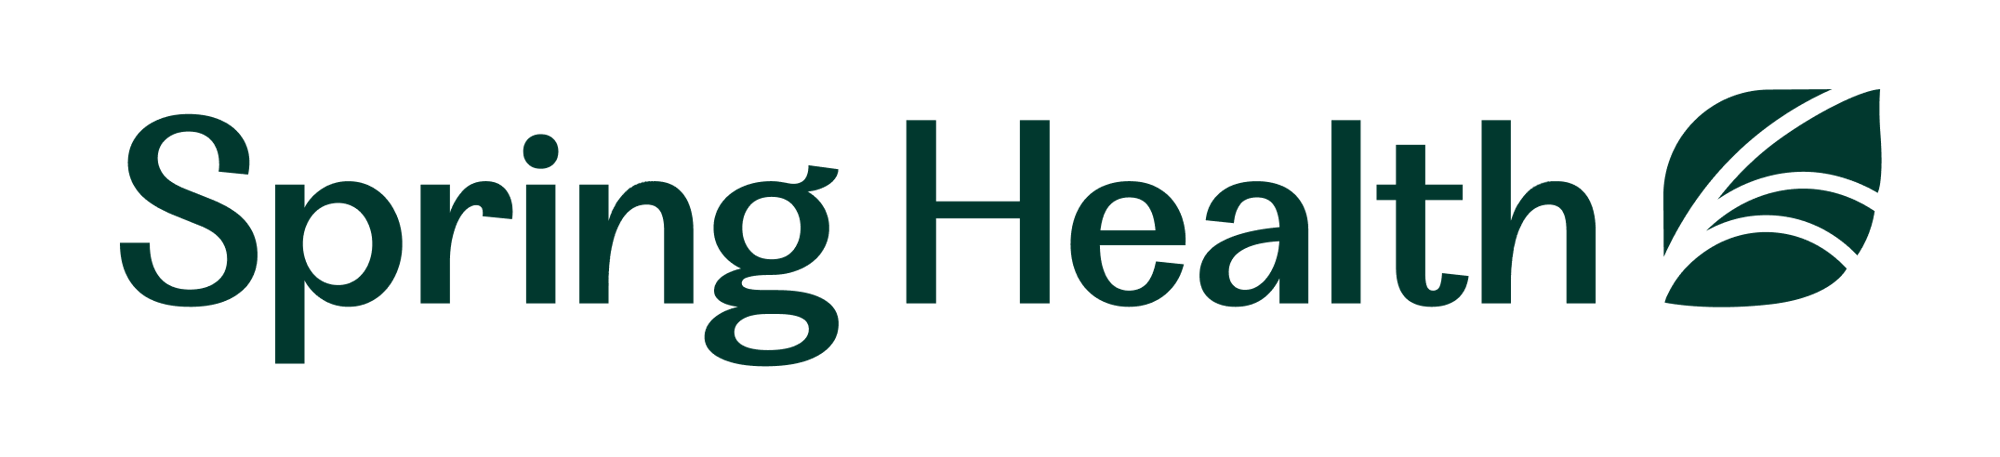 Spring Health-full logo-winter-green-1